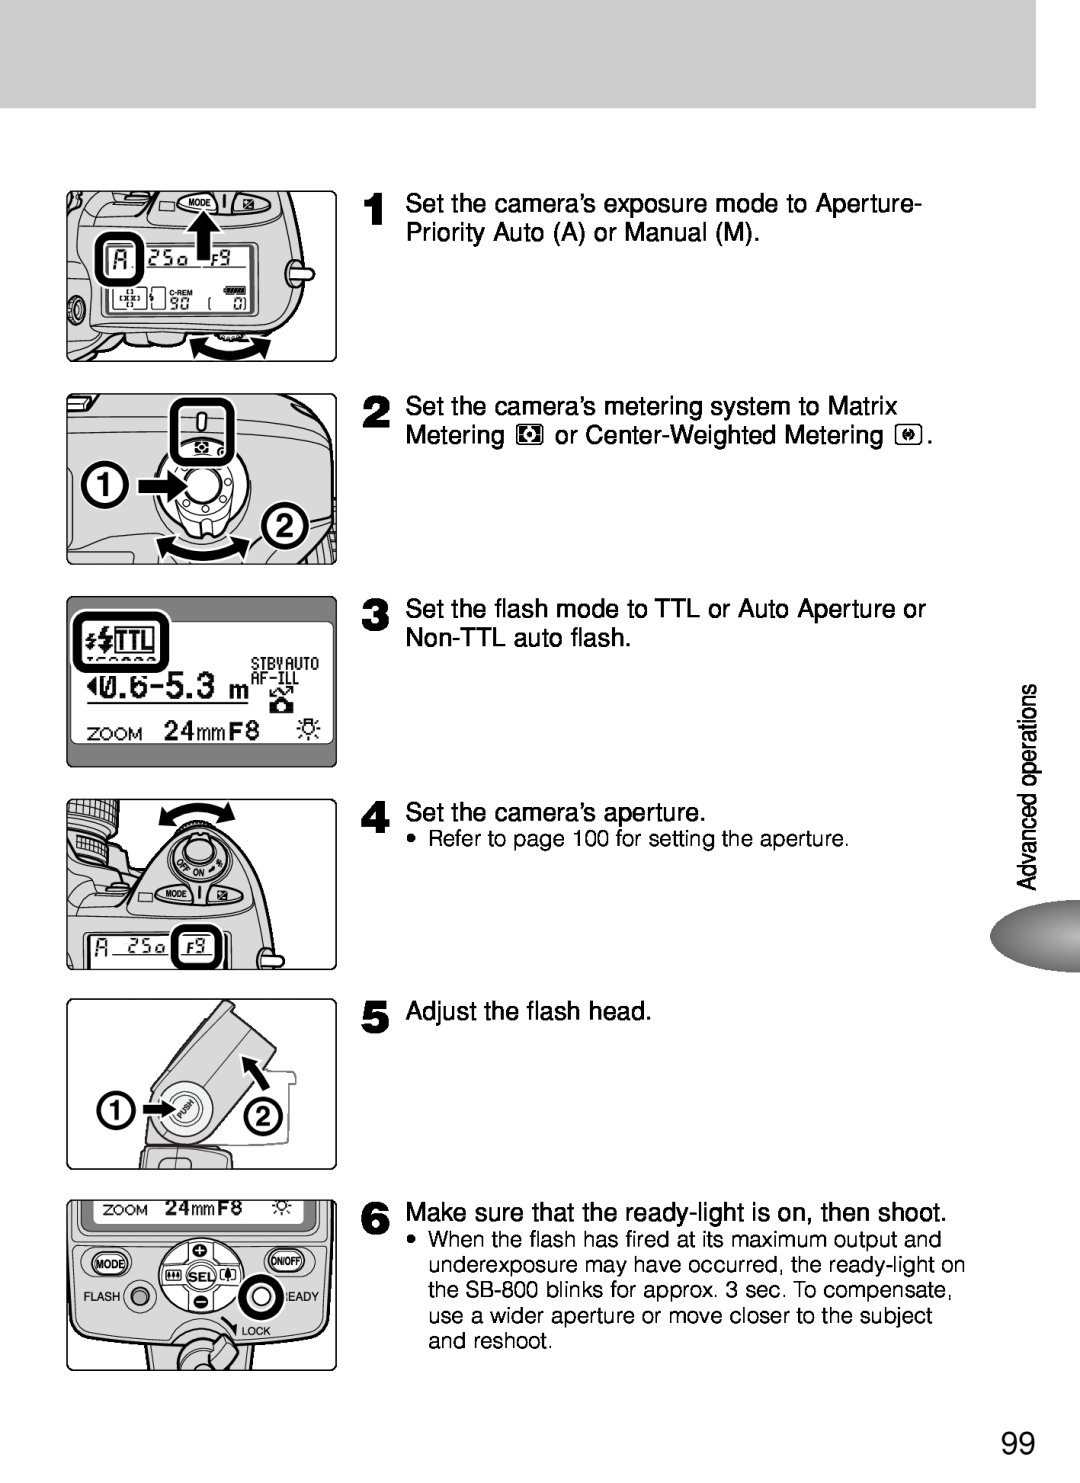 Nikon SB-800 instruction manual Set the flash mode to TTL or Auto Aperture or Non-TTL auto flash 